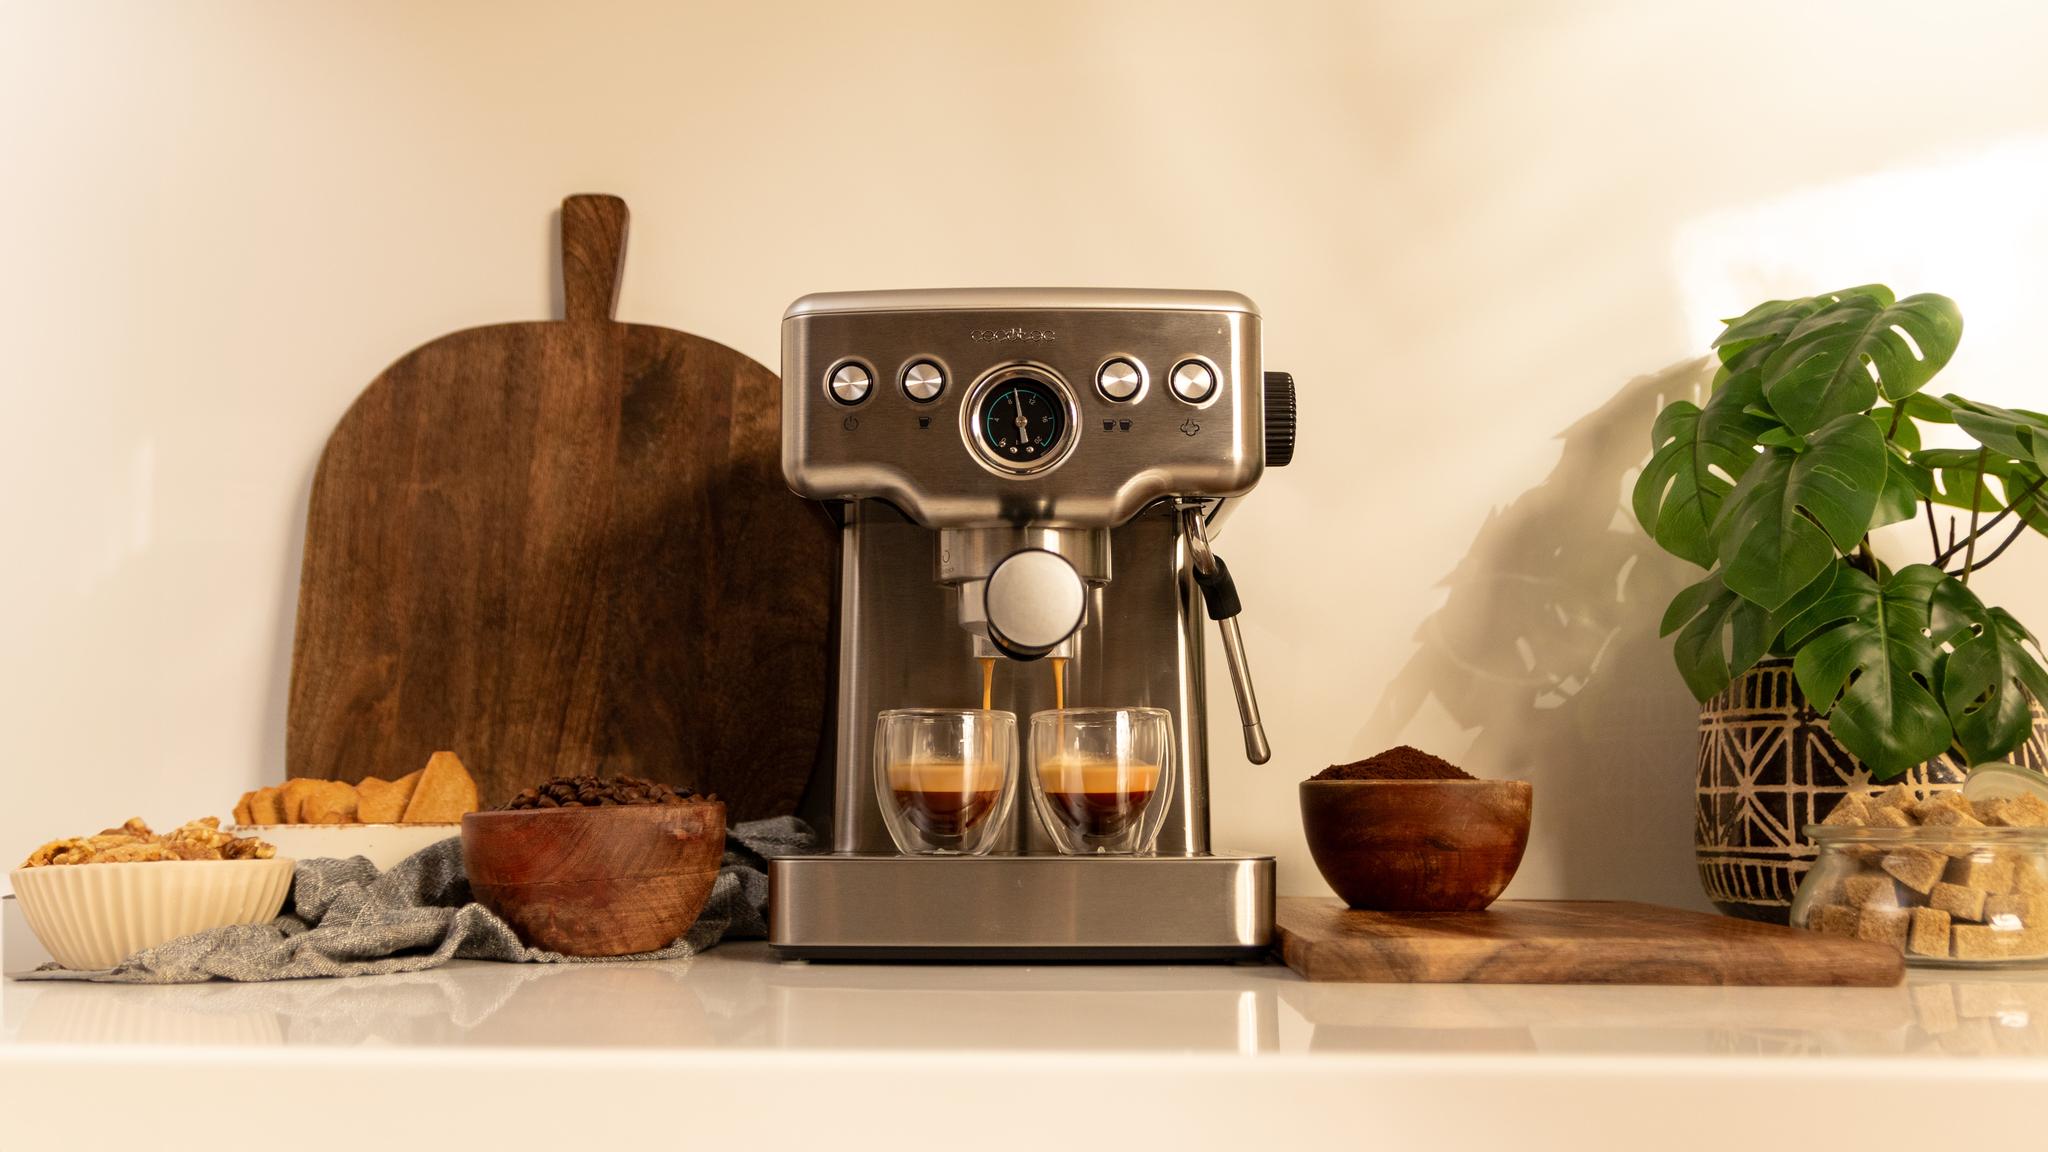 Cecotec Power Espresso 20 Barista Mini Cafetera Espresso con Nanómetro 20  Bares Acero Inoxidable, P